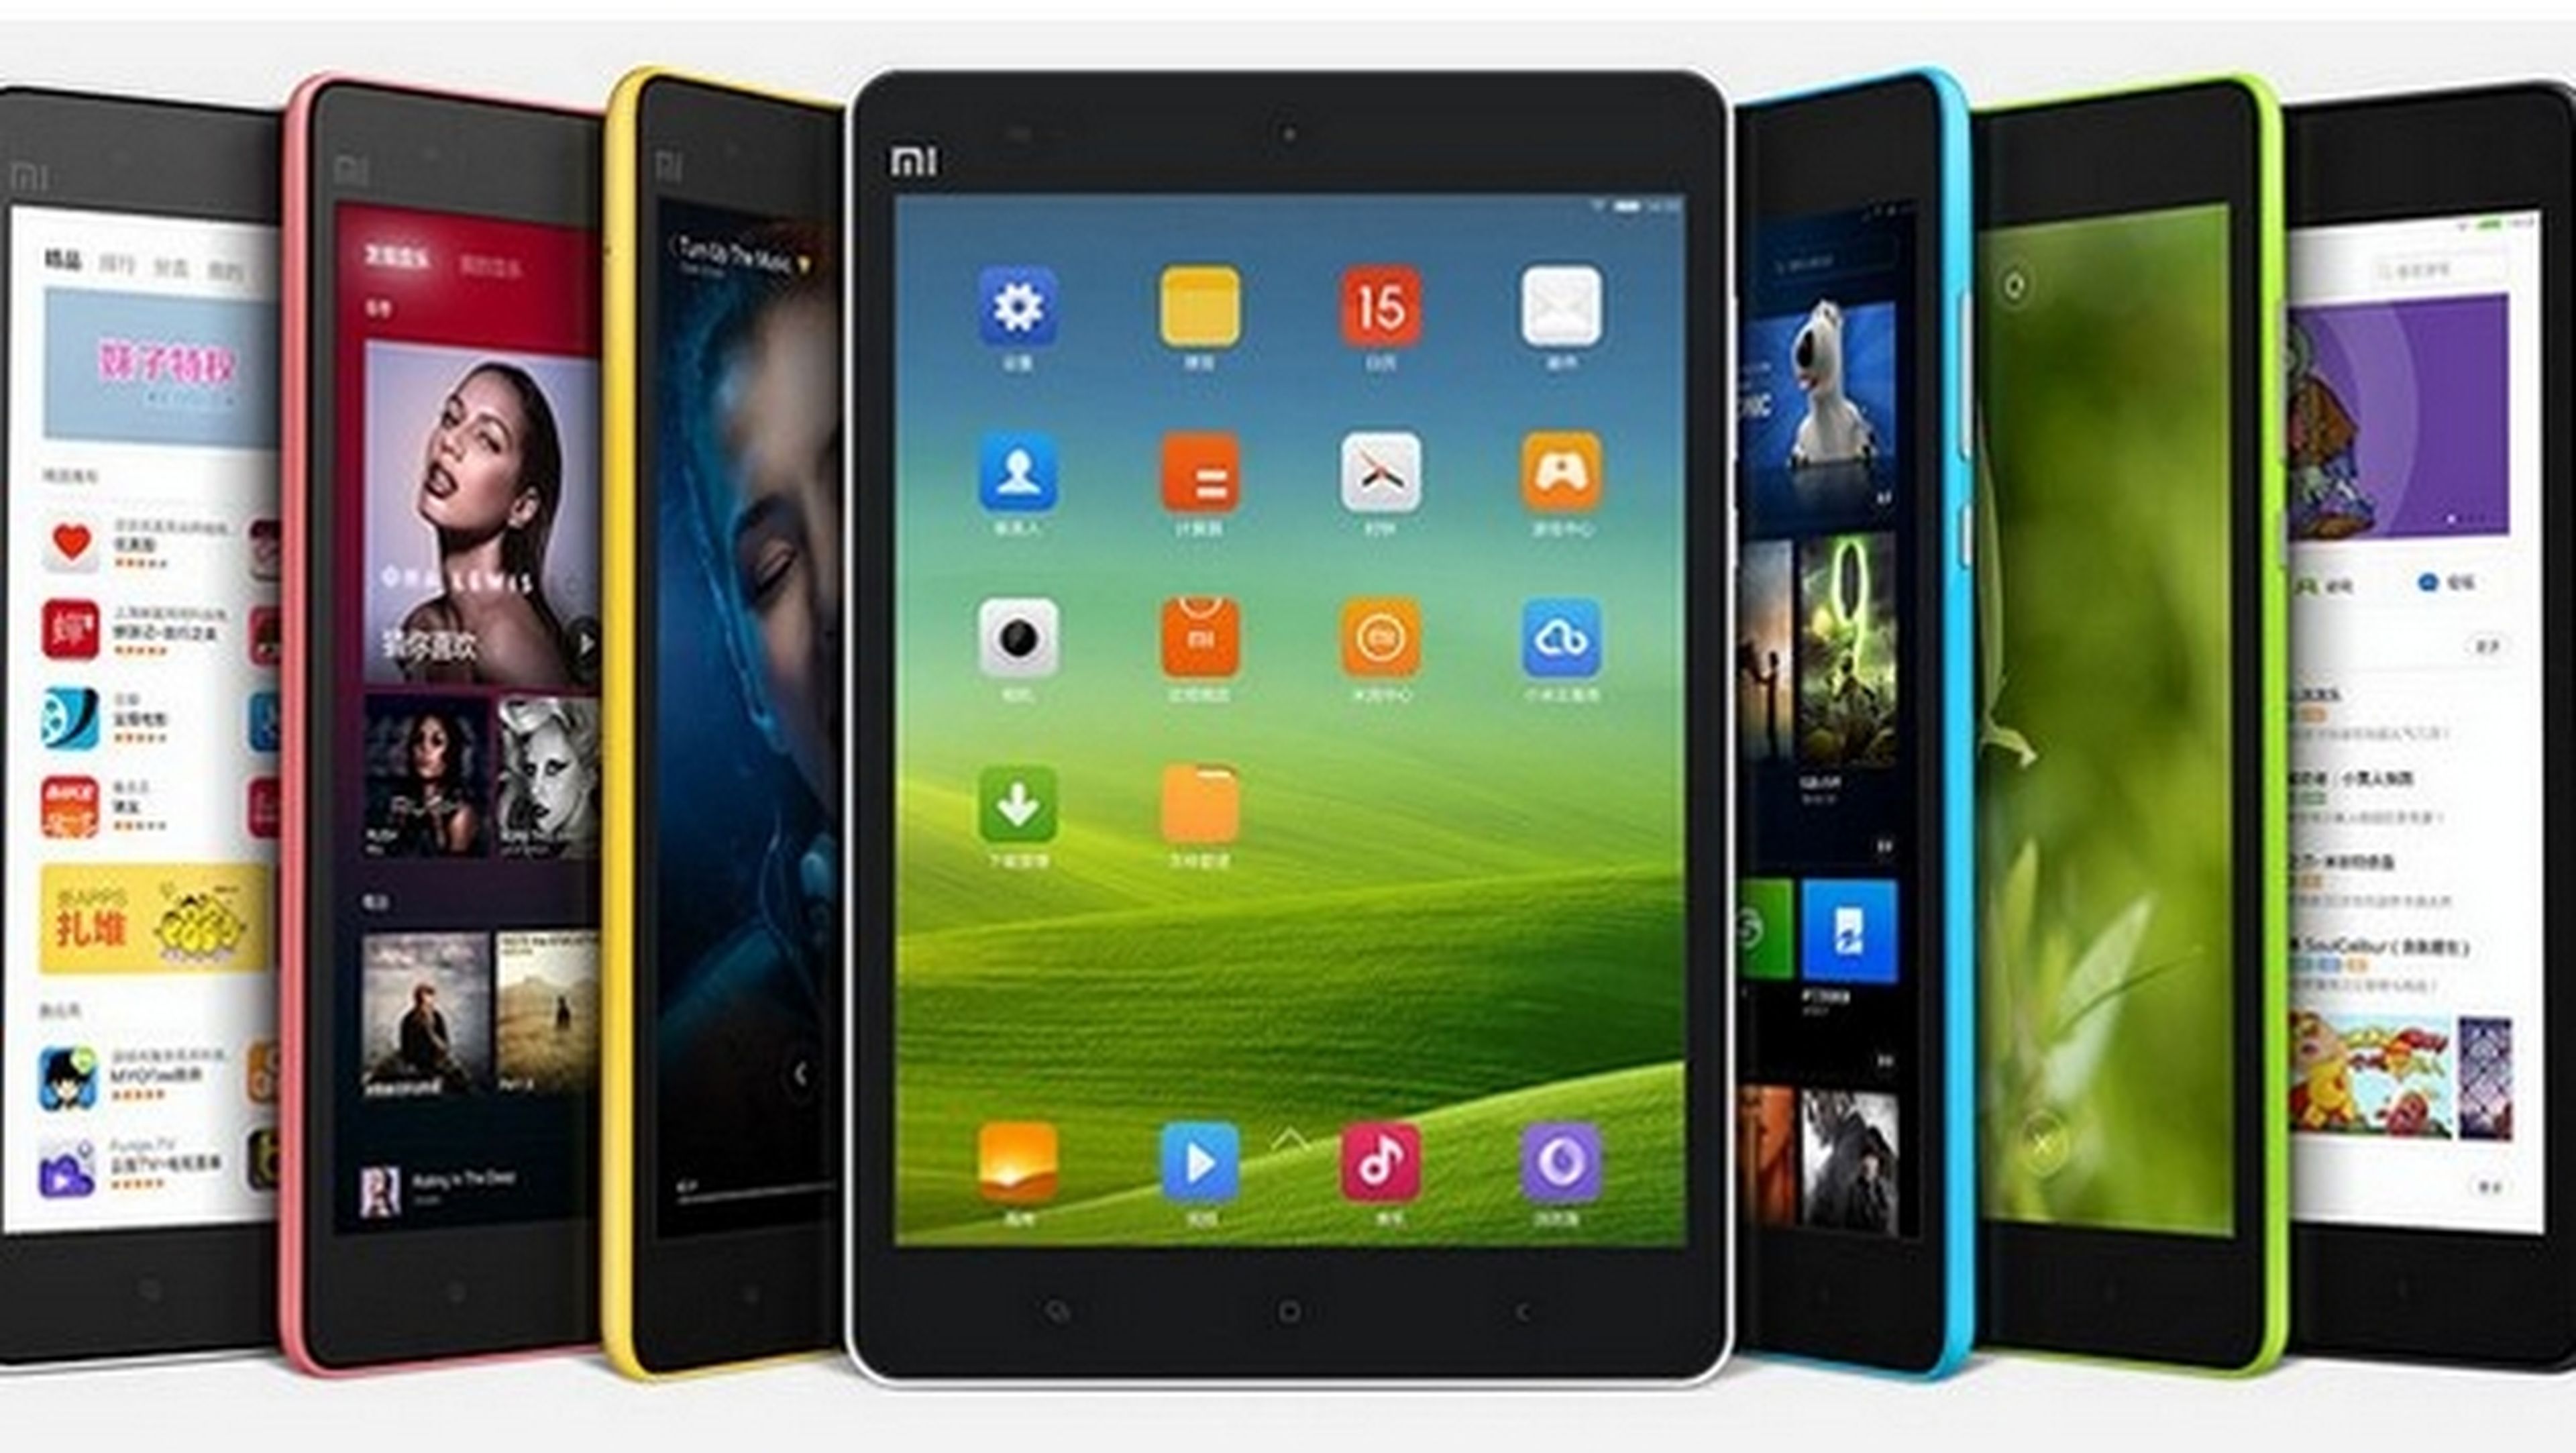 La tablet Xiaomi Mi Pad, alternativa al iPad Mini Retina, vende 50.000 unidades en cuatro minutos.